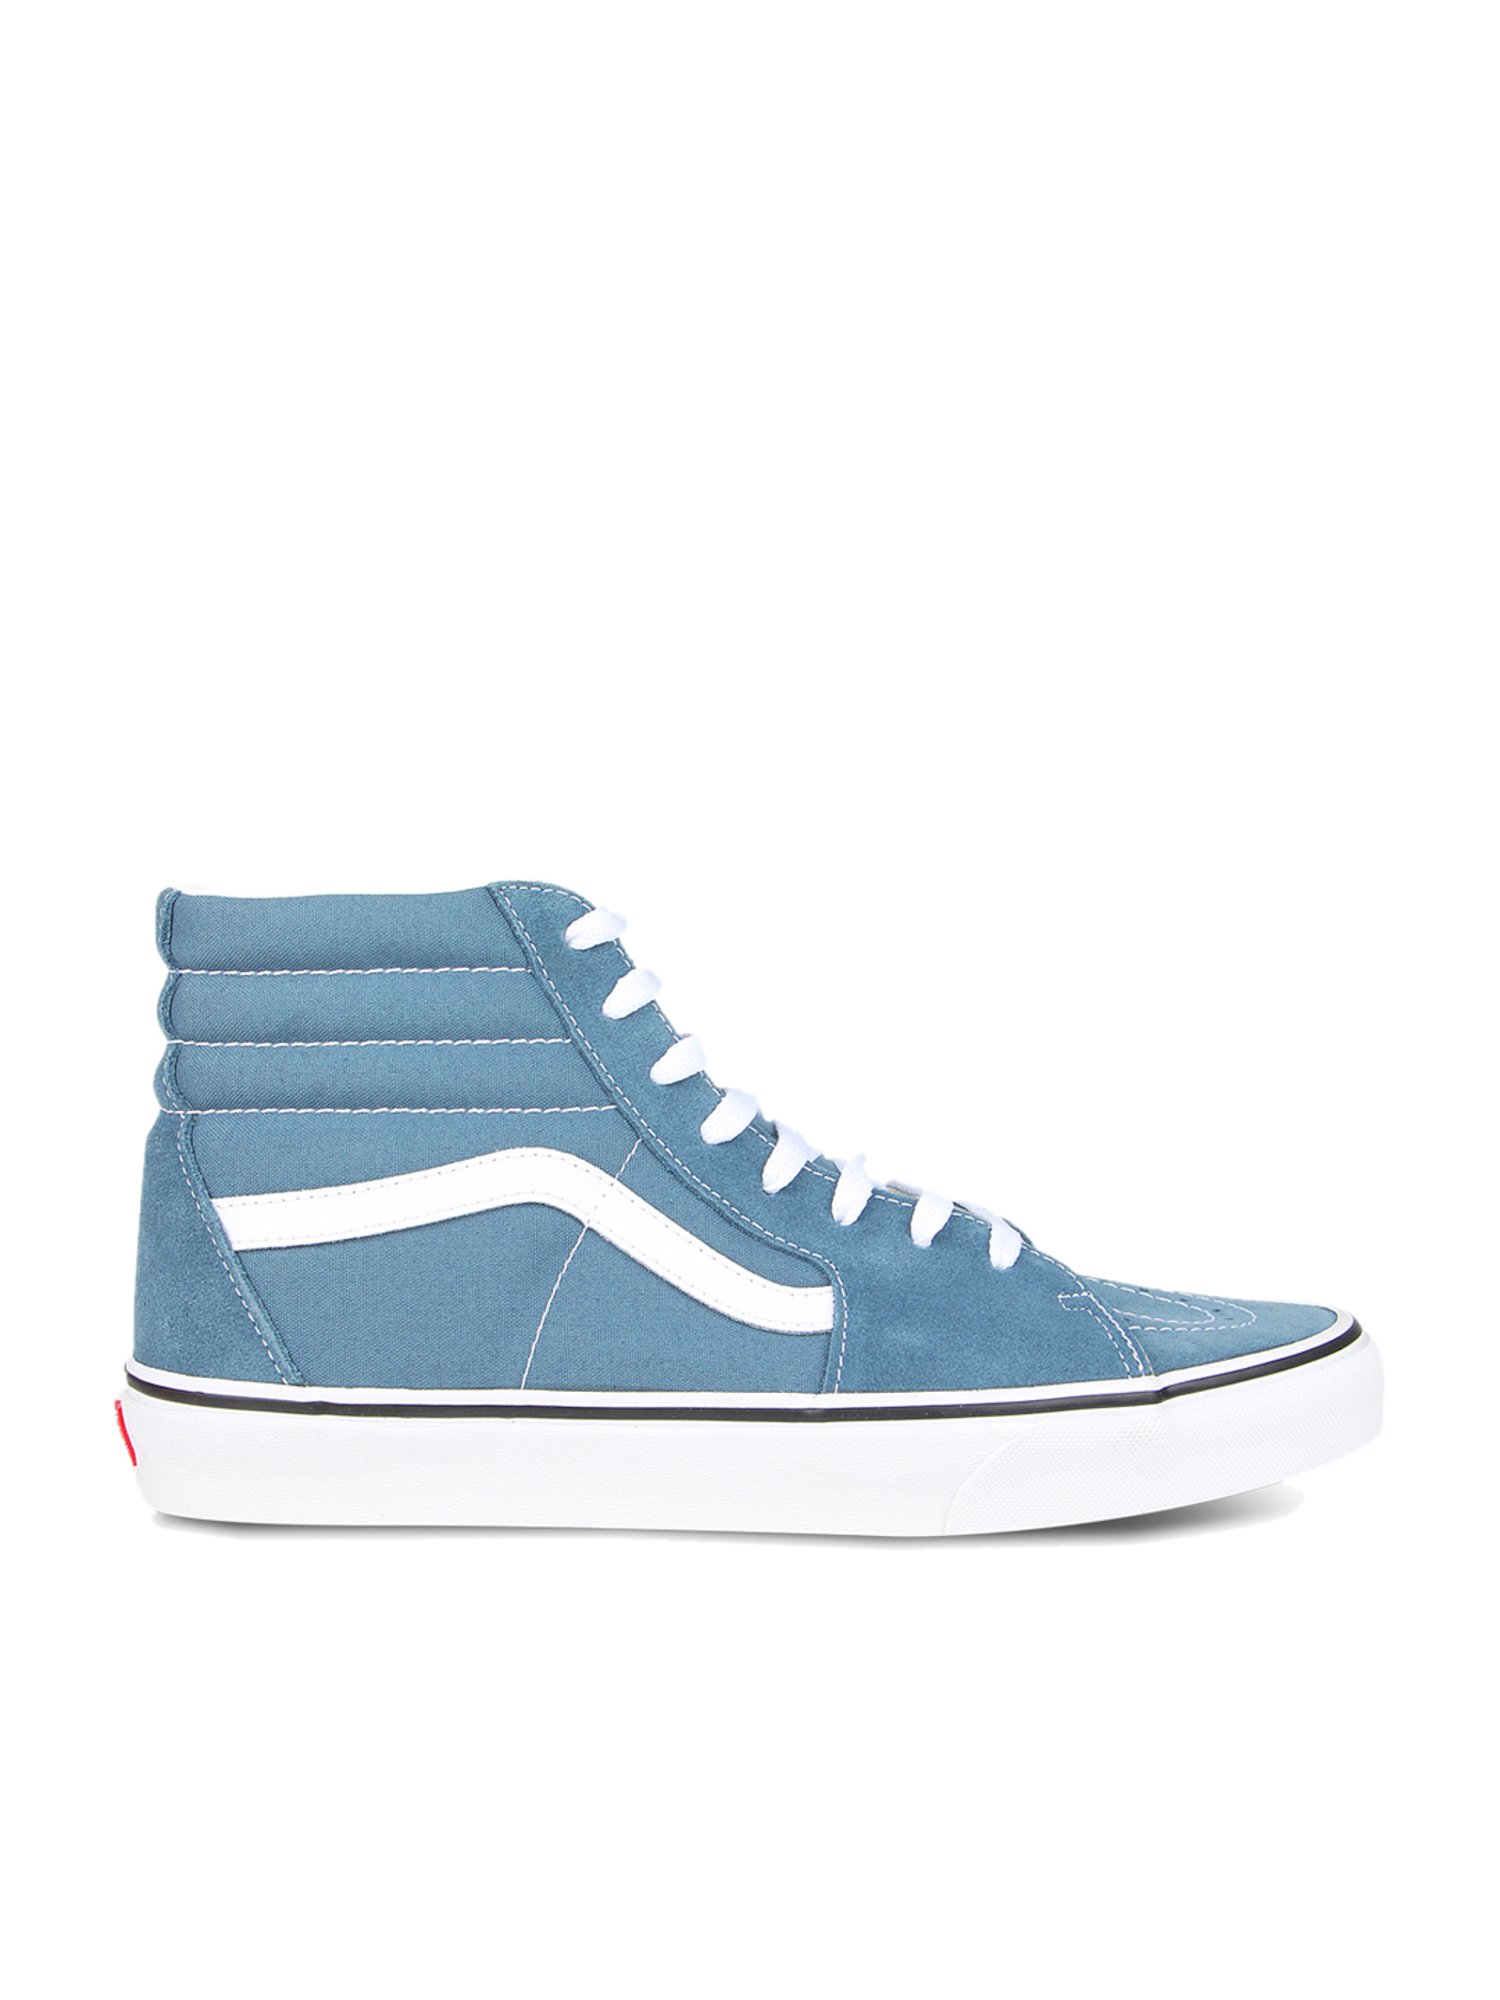 Buy Vans SK8-HI Blue Ankle Sneakers for Men Price @ CLiQ